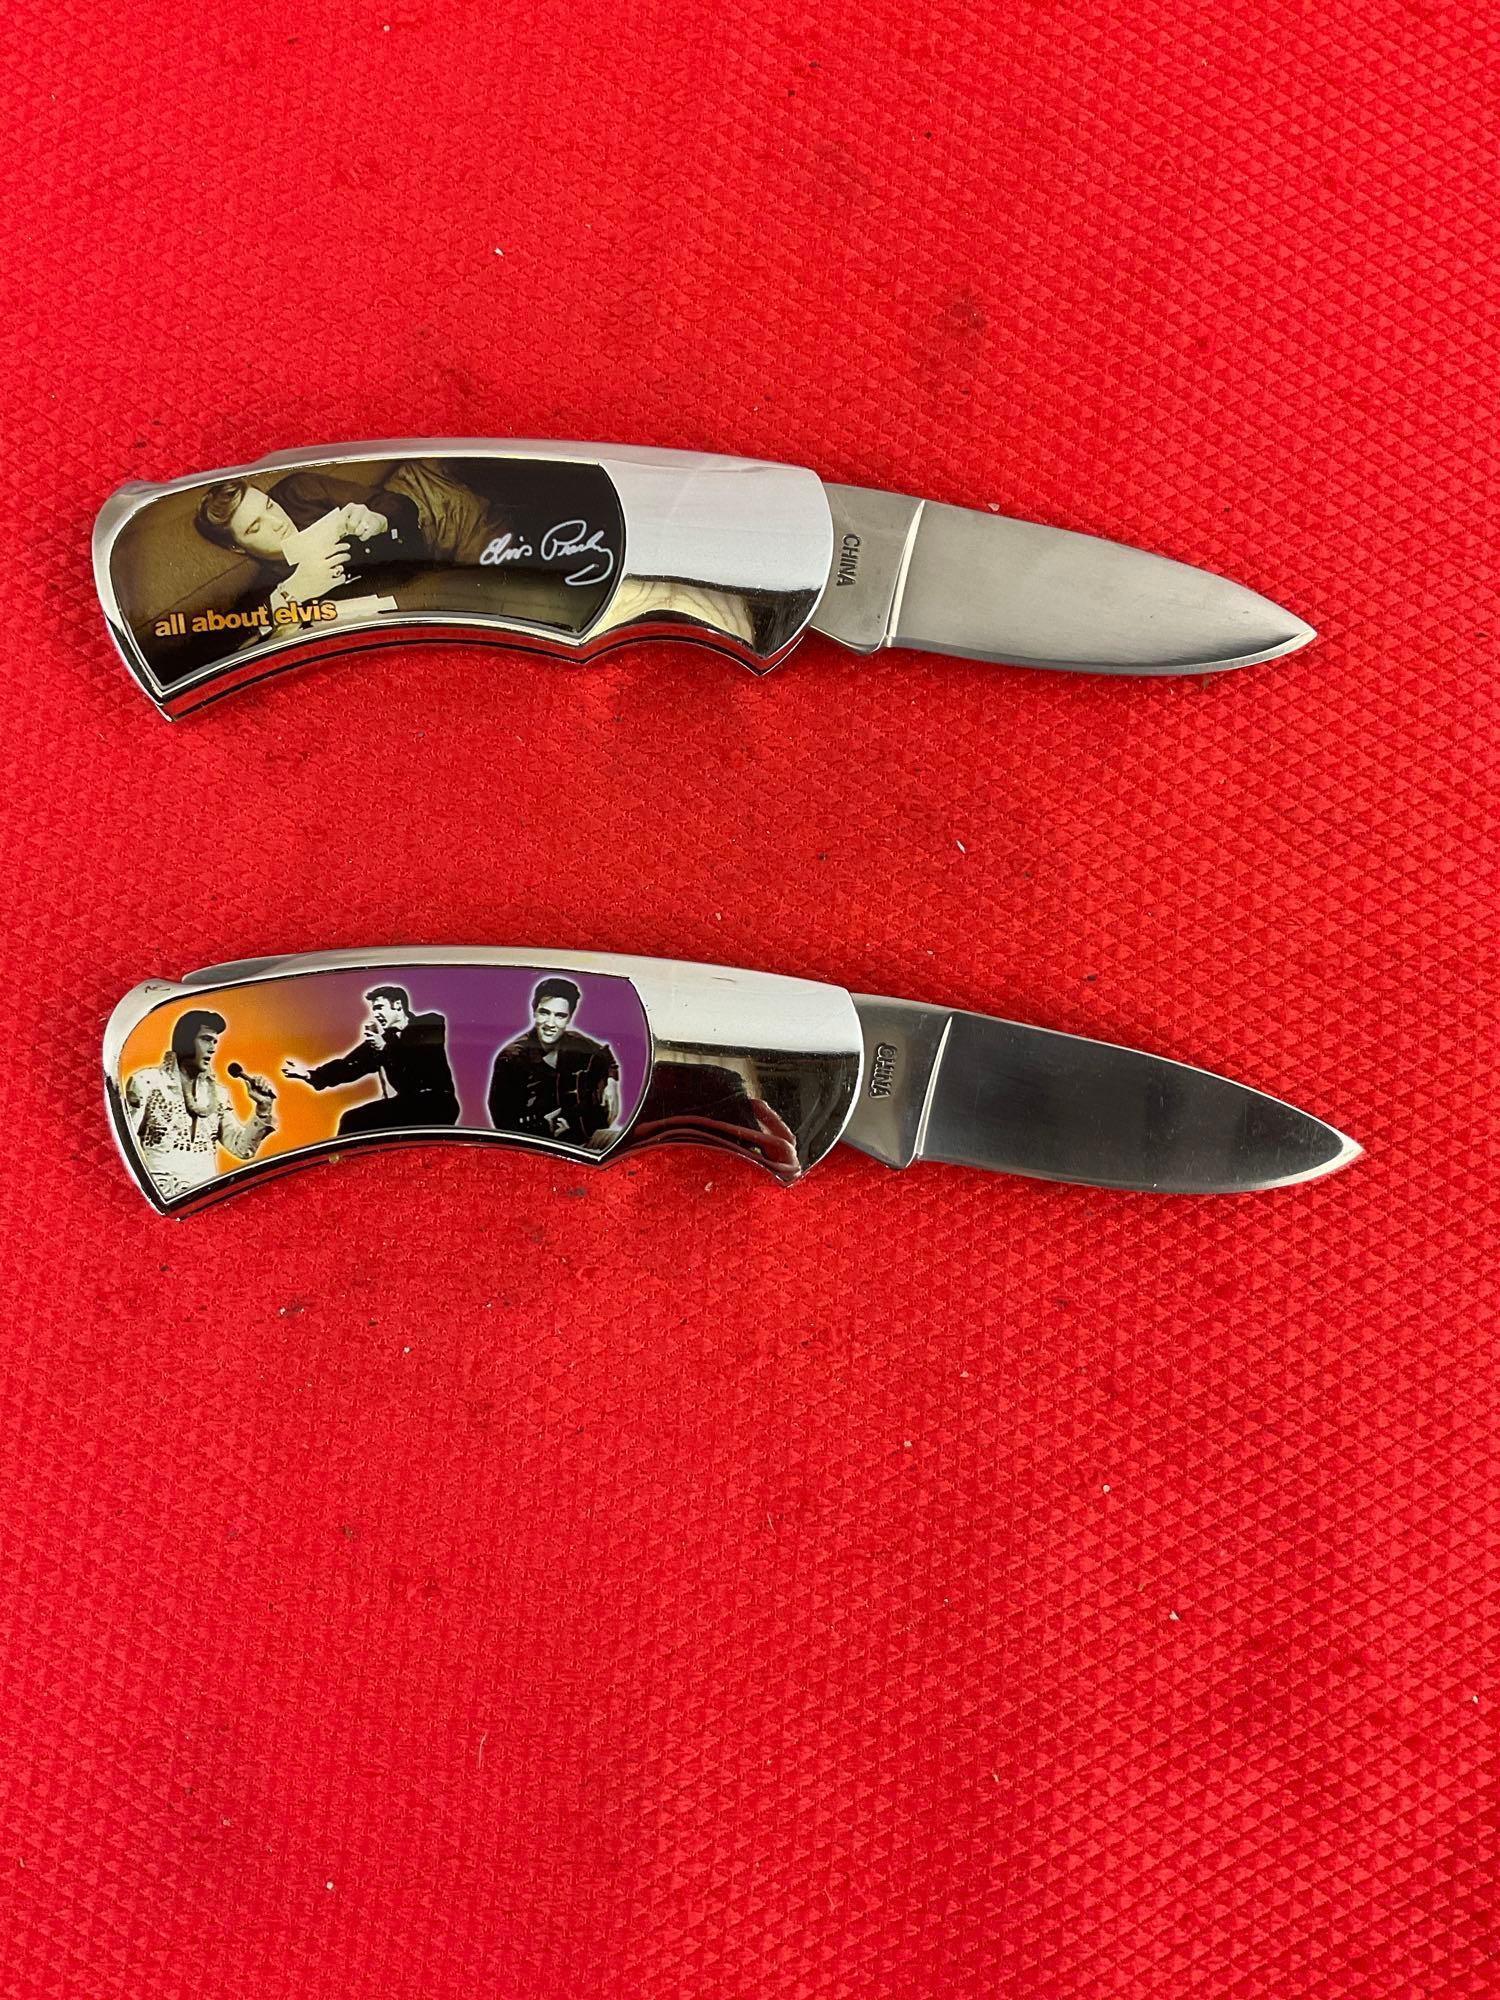 2 pcs Collectible Elvis Presley Handle Folding Pocket Knives Models KB6214 & KB6219. NIB. See pics.